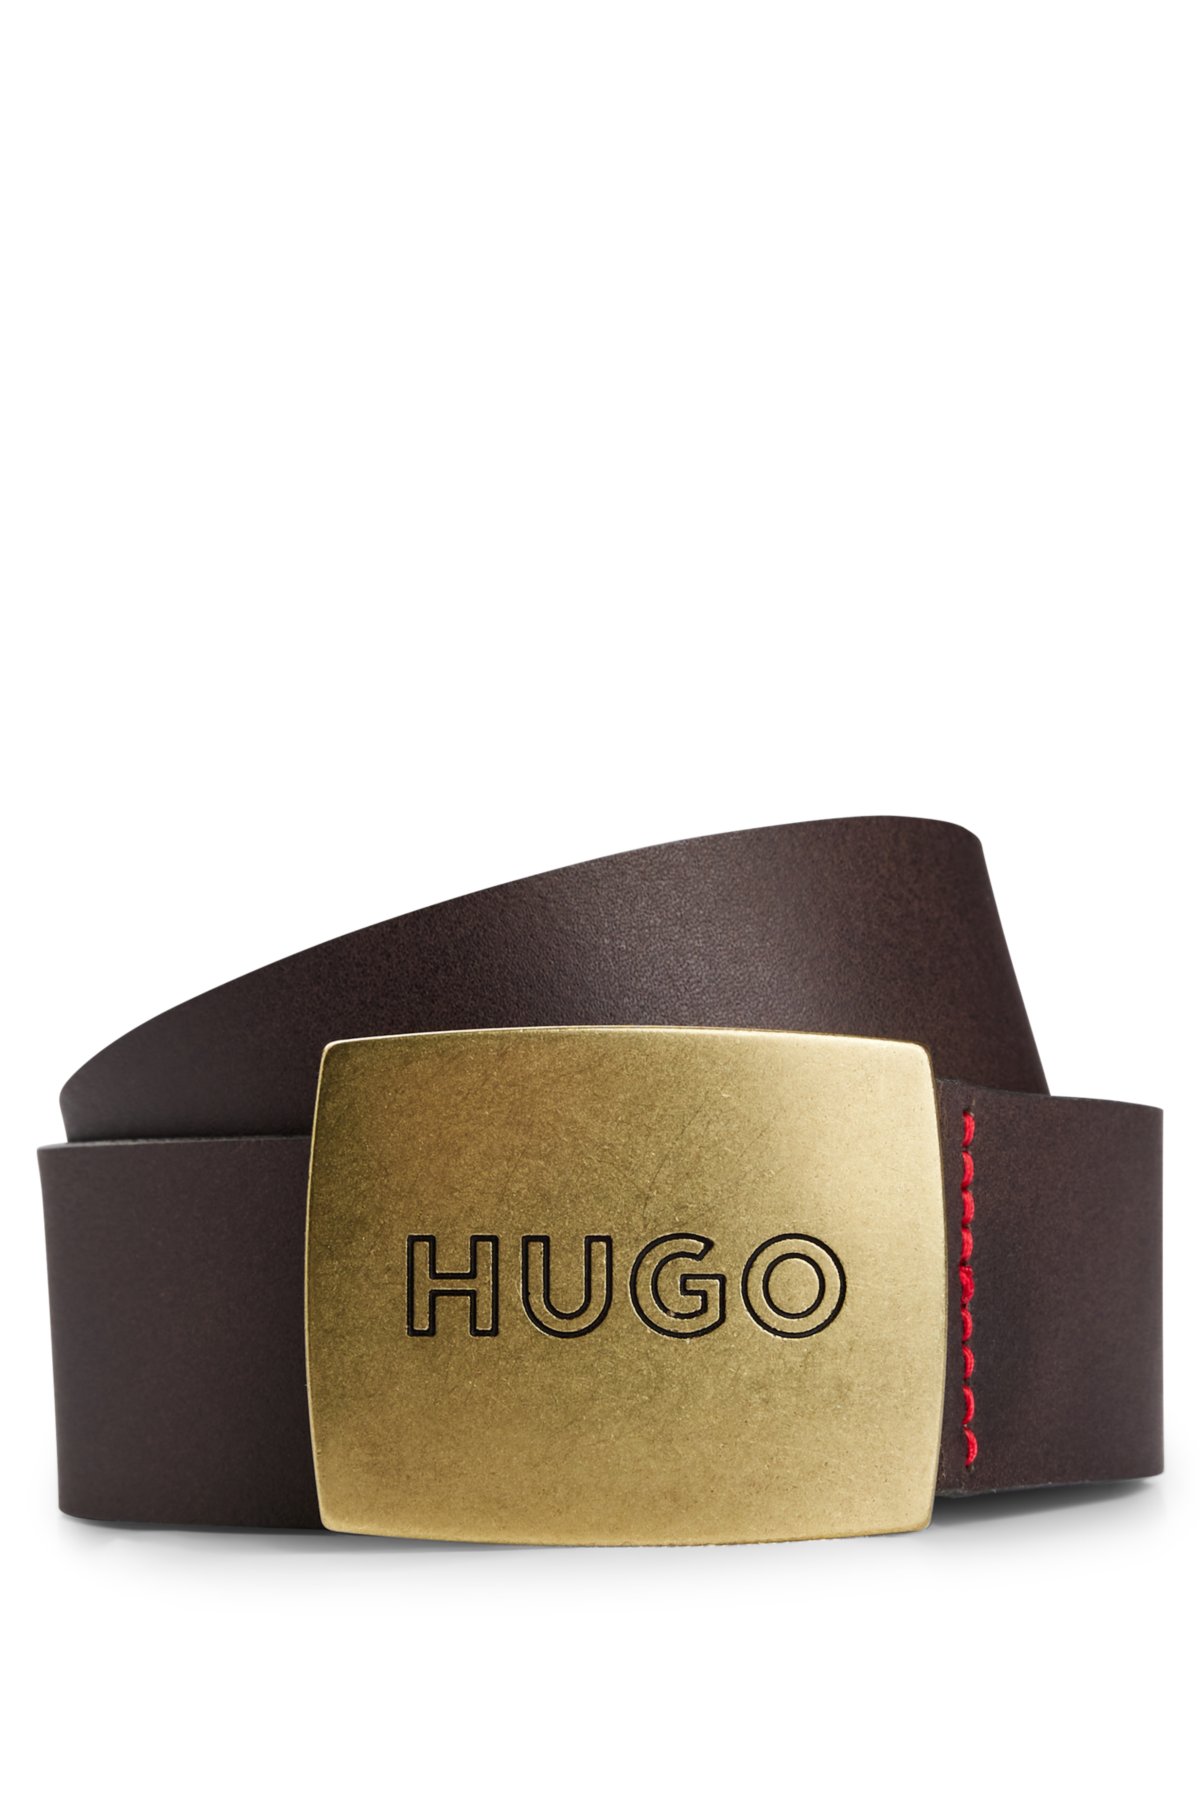 HUGO - Koppelschließe der Logo mit auf Ledergürtel